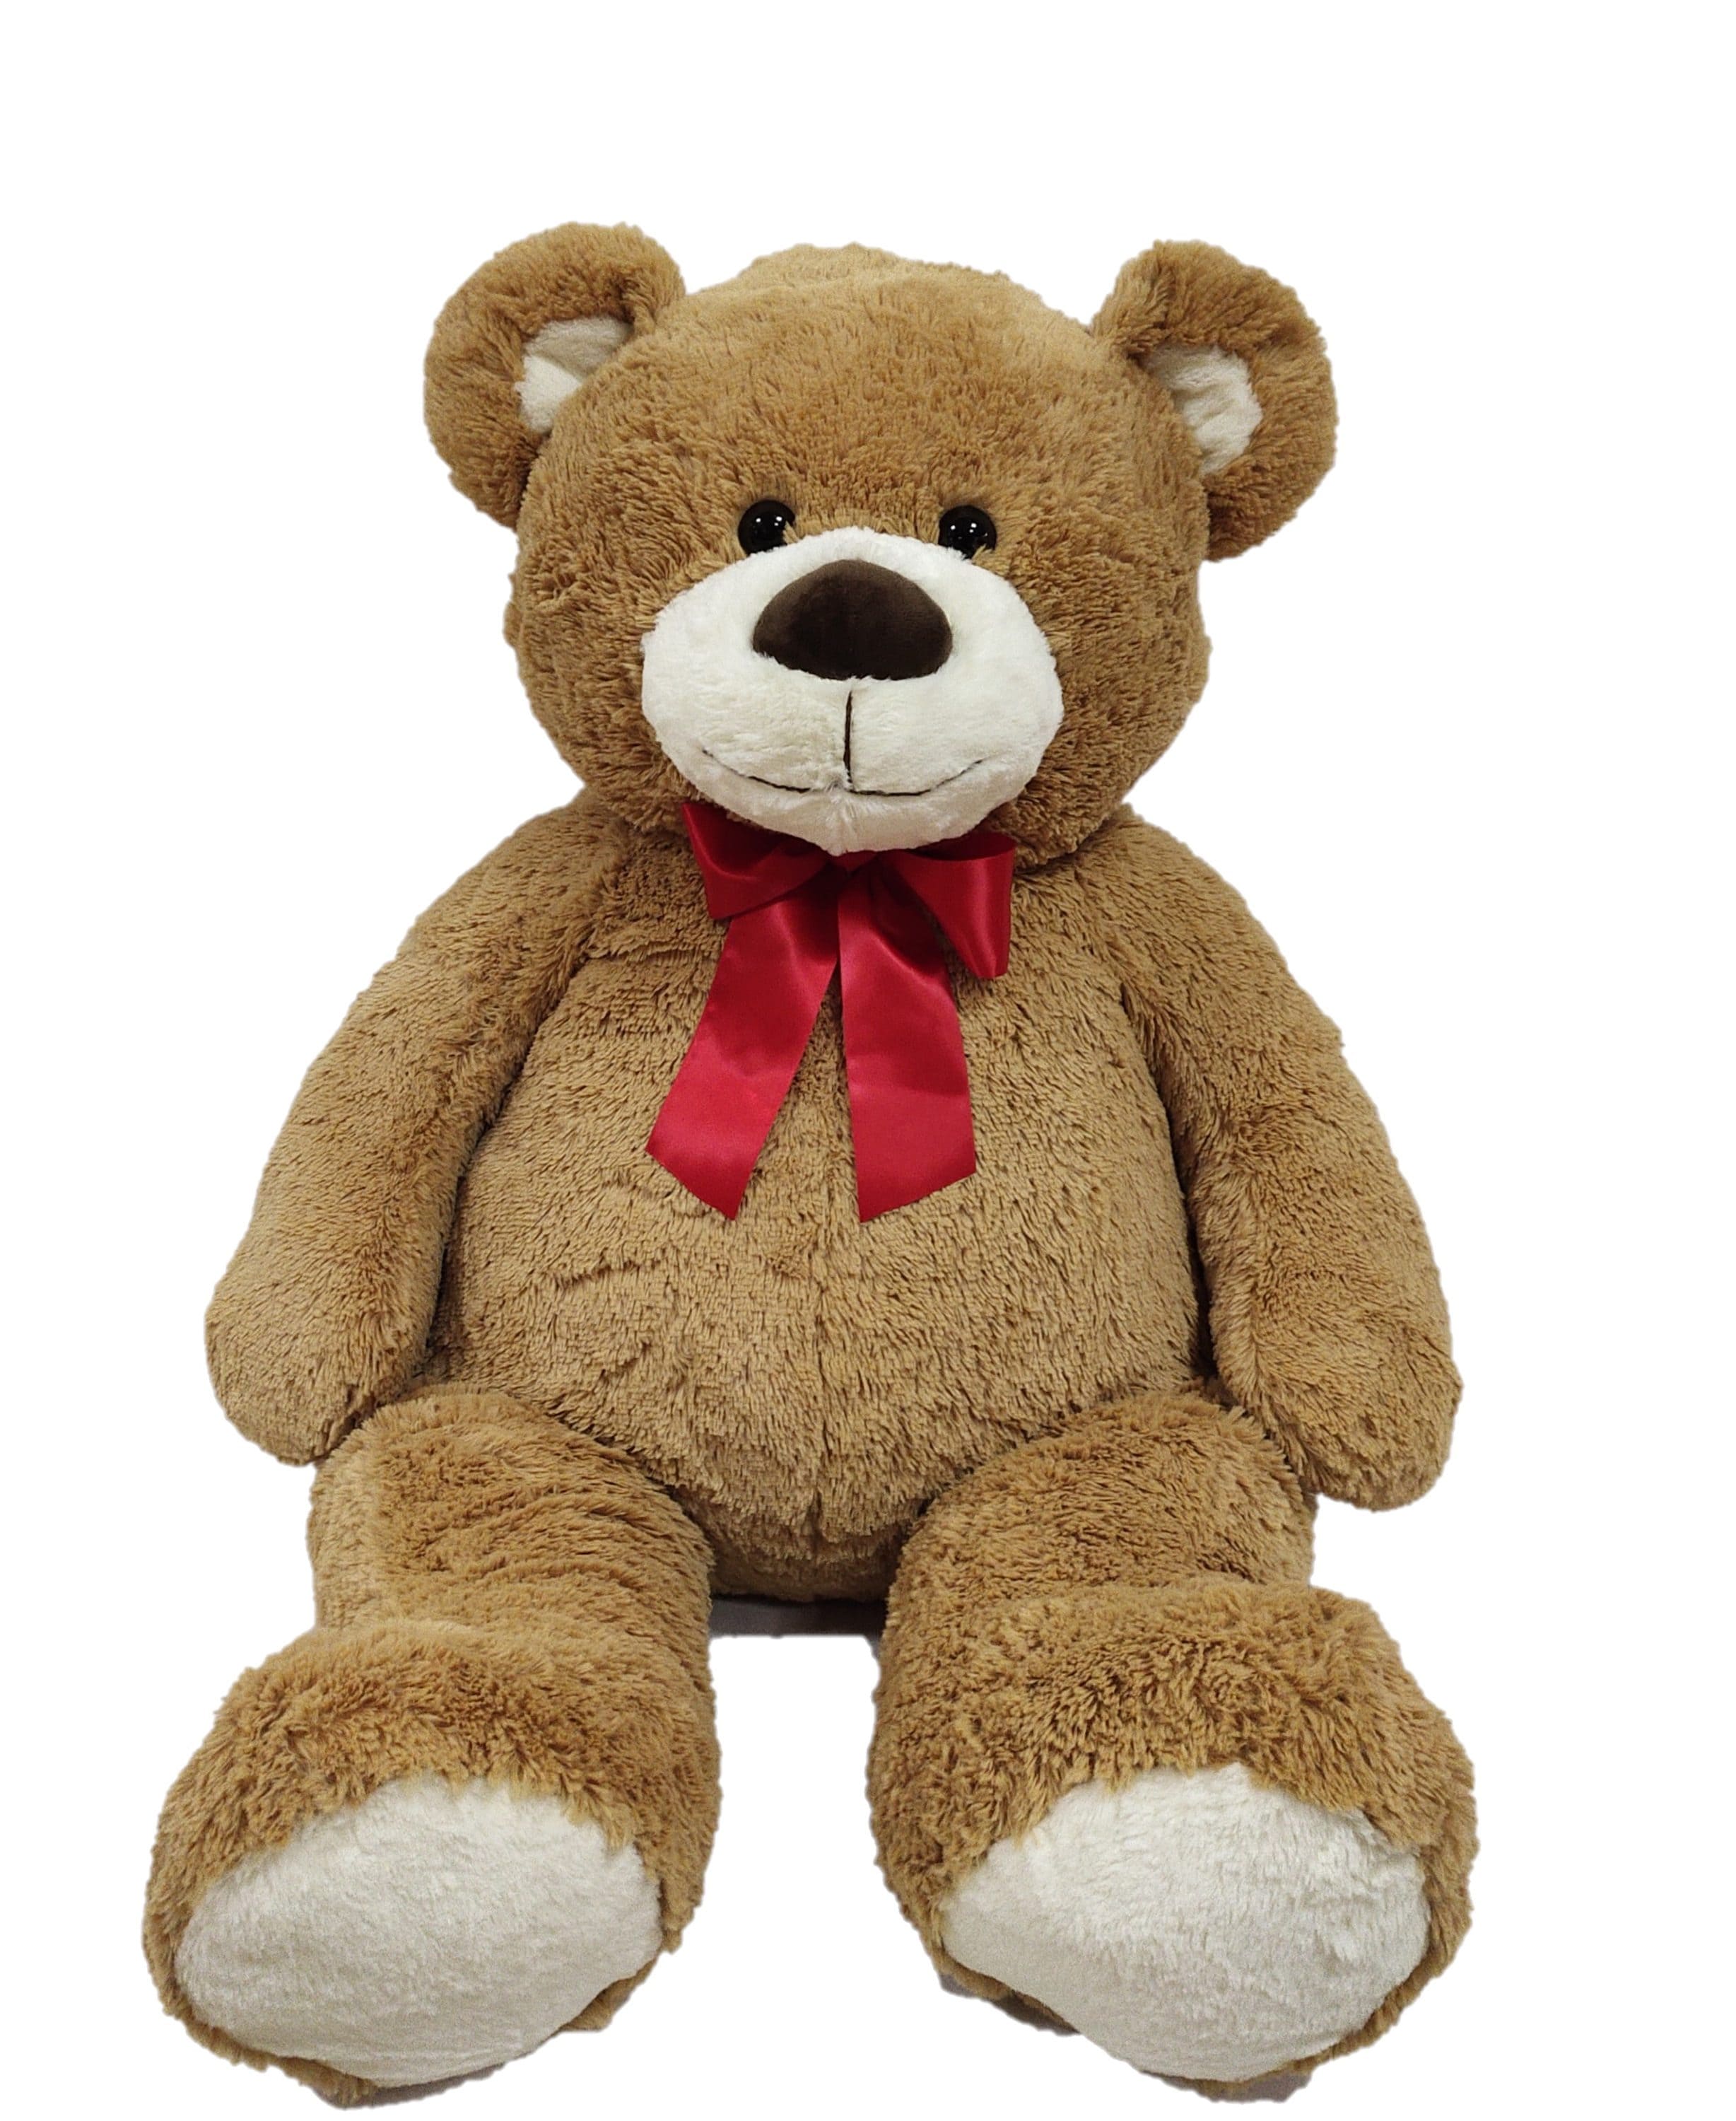 Big Jumbo Stuffed Animal Soft Plush Kids Christmas Toy Gift Large Teddy Bear 